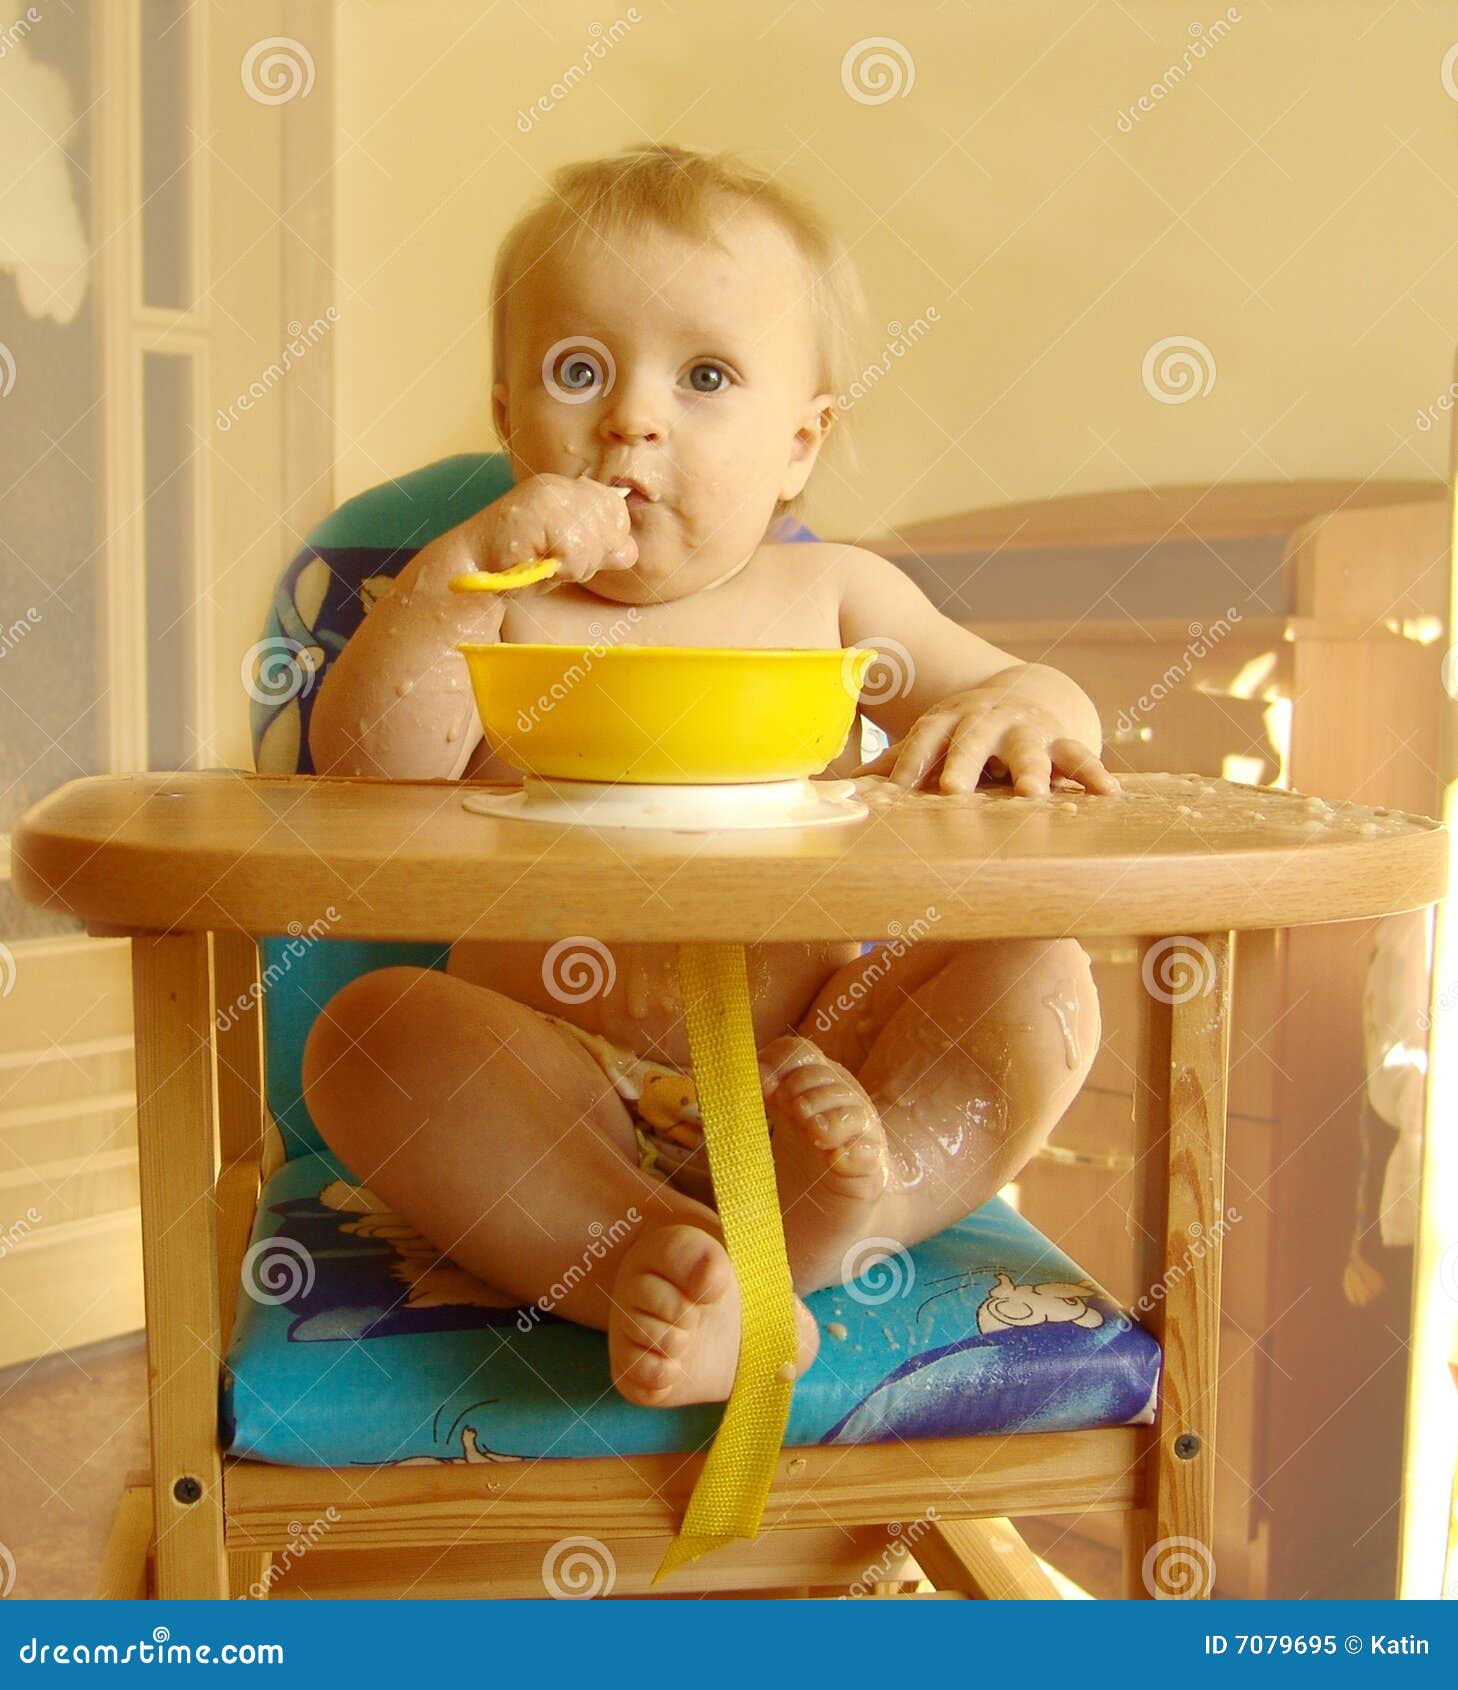 the child eats porridge